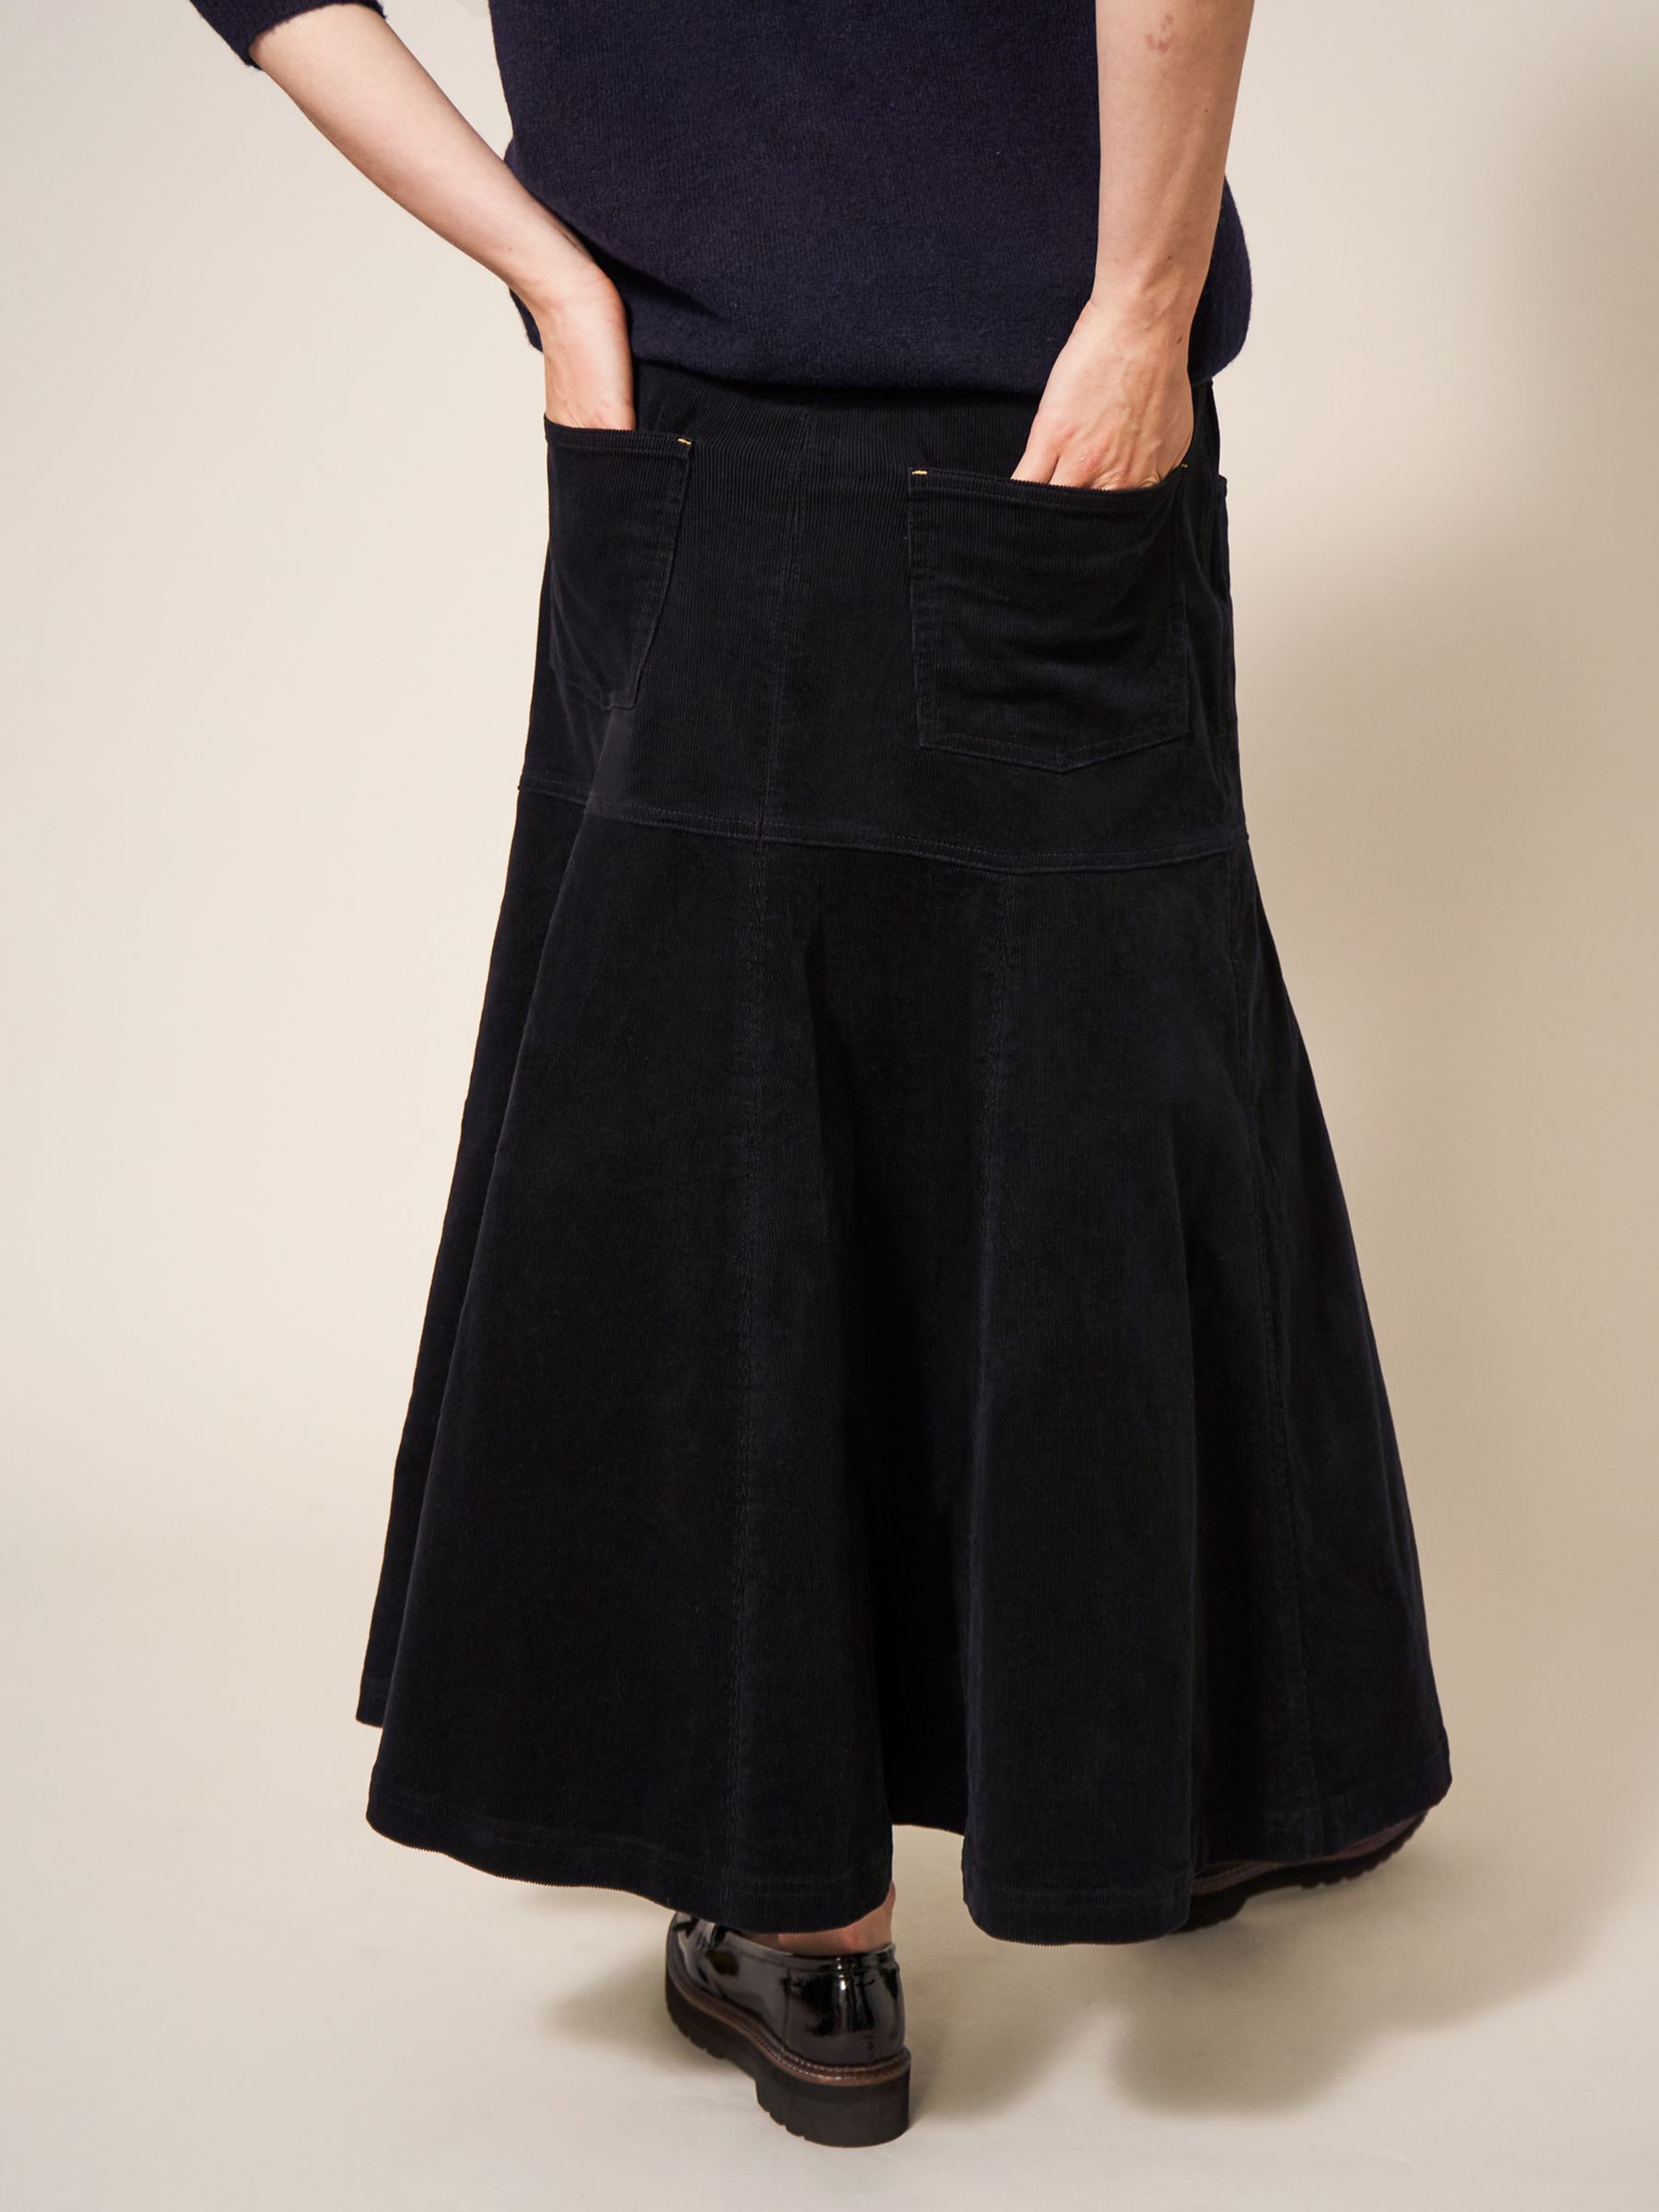 White Stuff Organic Cotton Blend Corduroy Skirt, Pure Black, 6